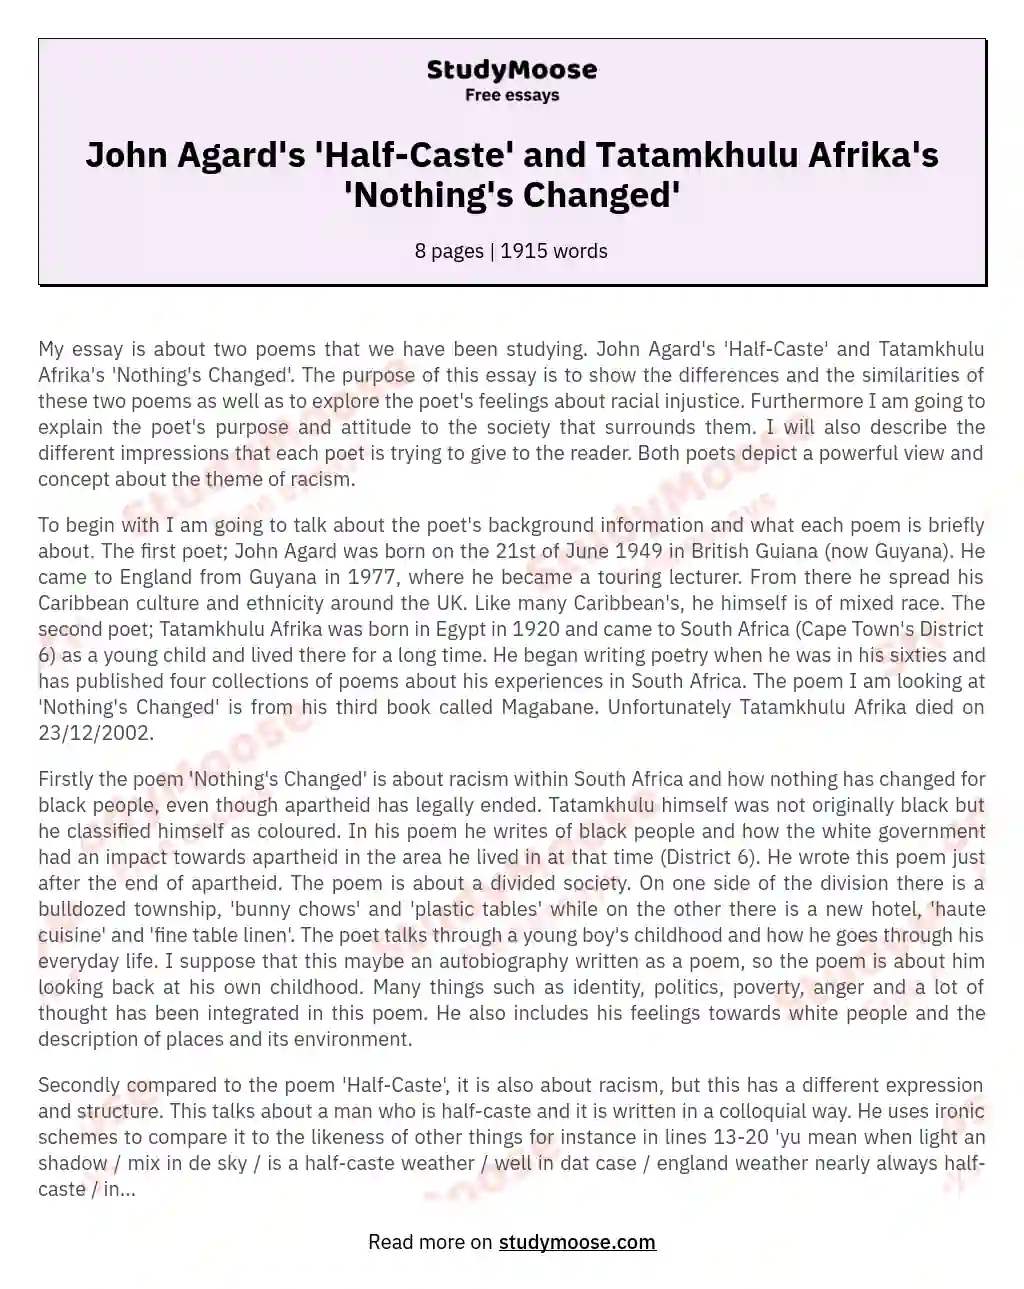 John Agard's 'Half-Caste' and Tatamkhulu Afrika's 'Nothing's Changed' essay